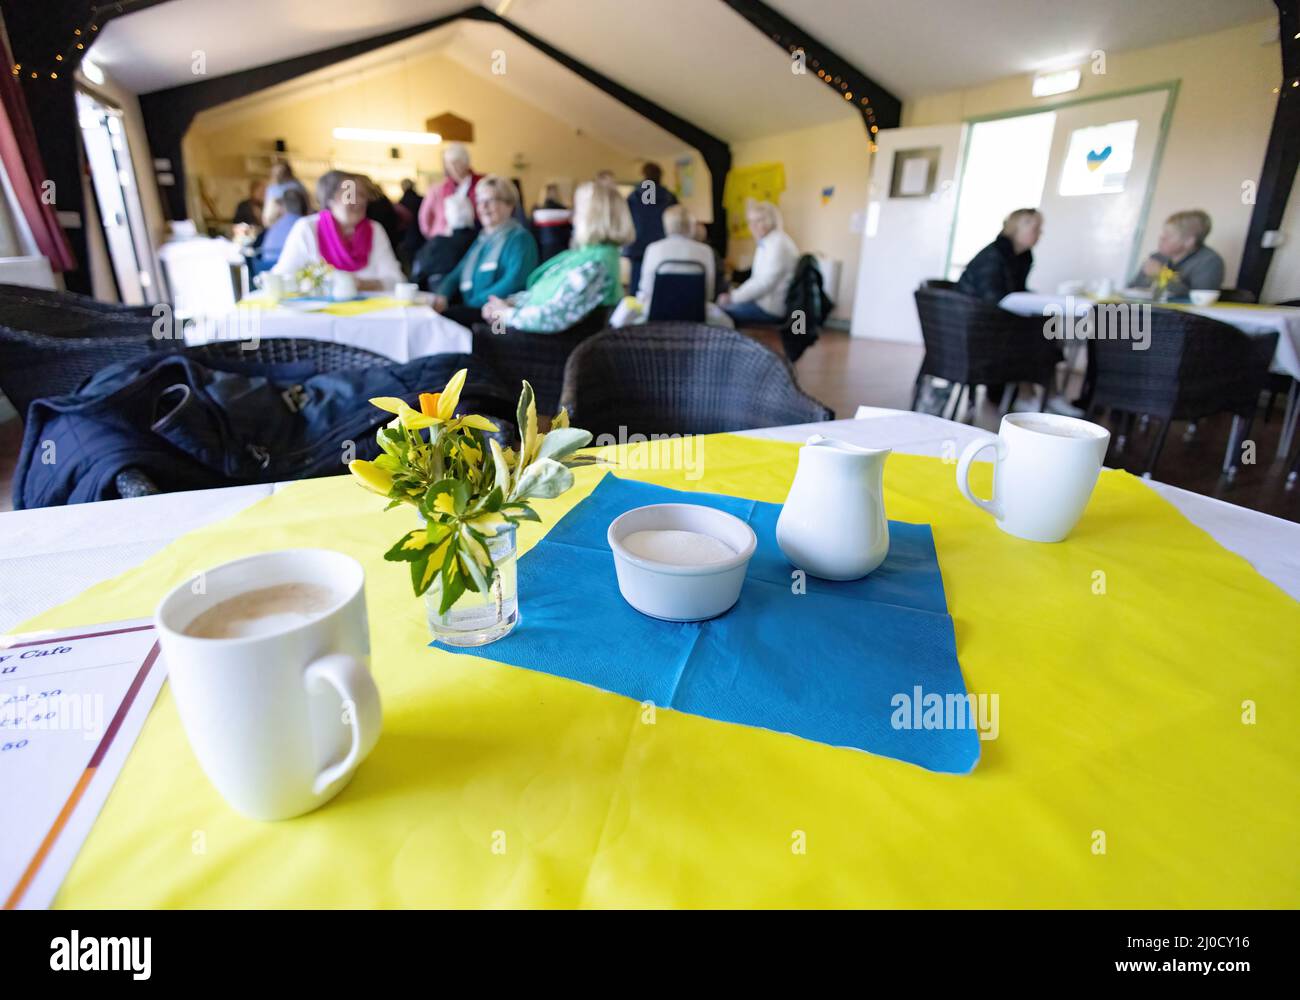 Ukraine Aid UK, for the Ukraine conflict; Charity coffee morning fundraising for Ukraine refugee relief, Stetchworth village hall, Cambridgeshire UK Stock Photo